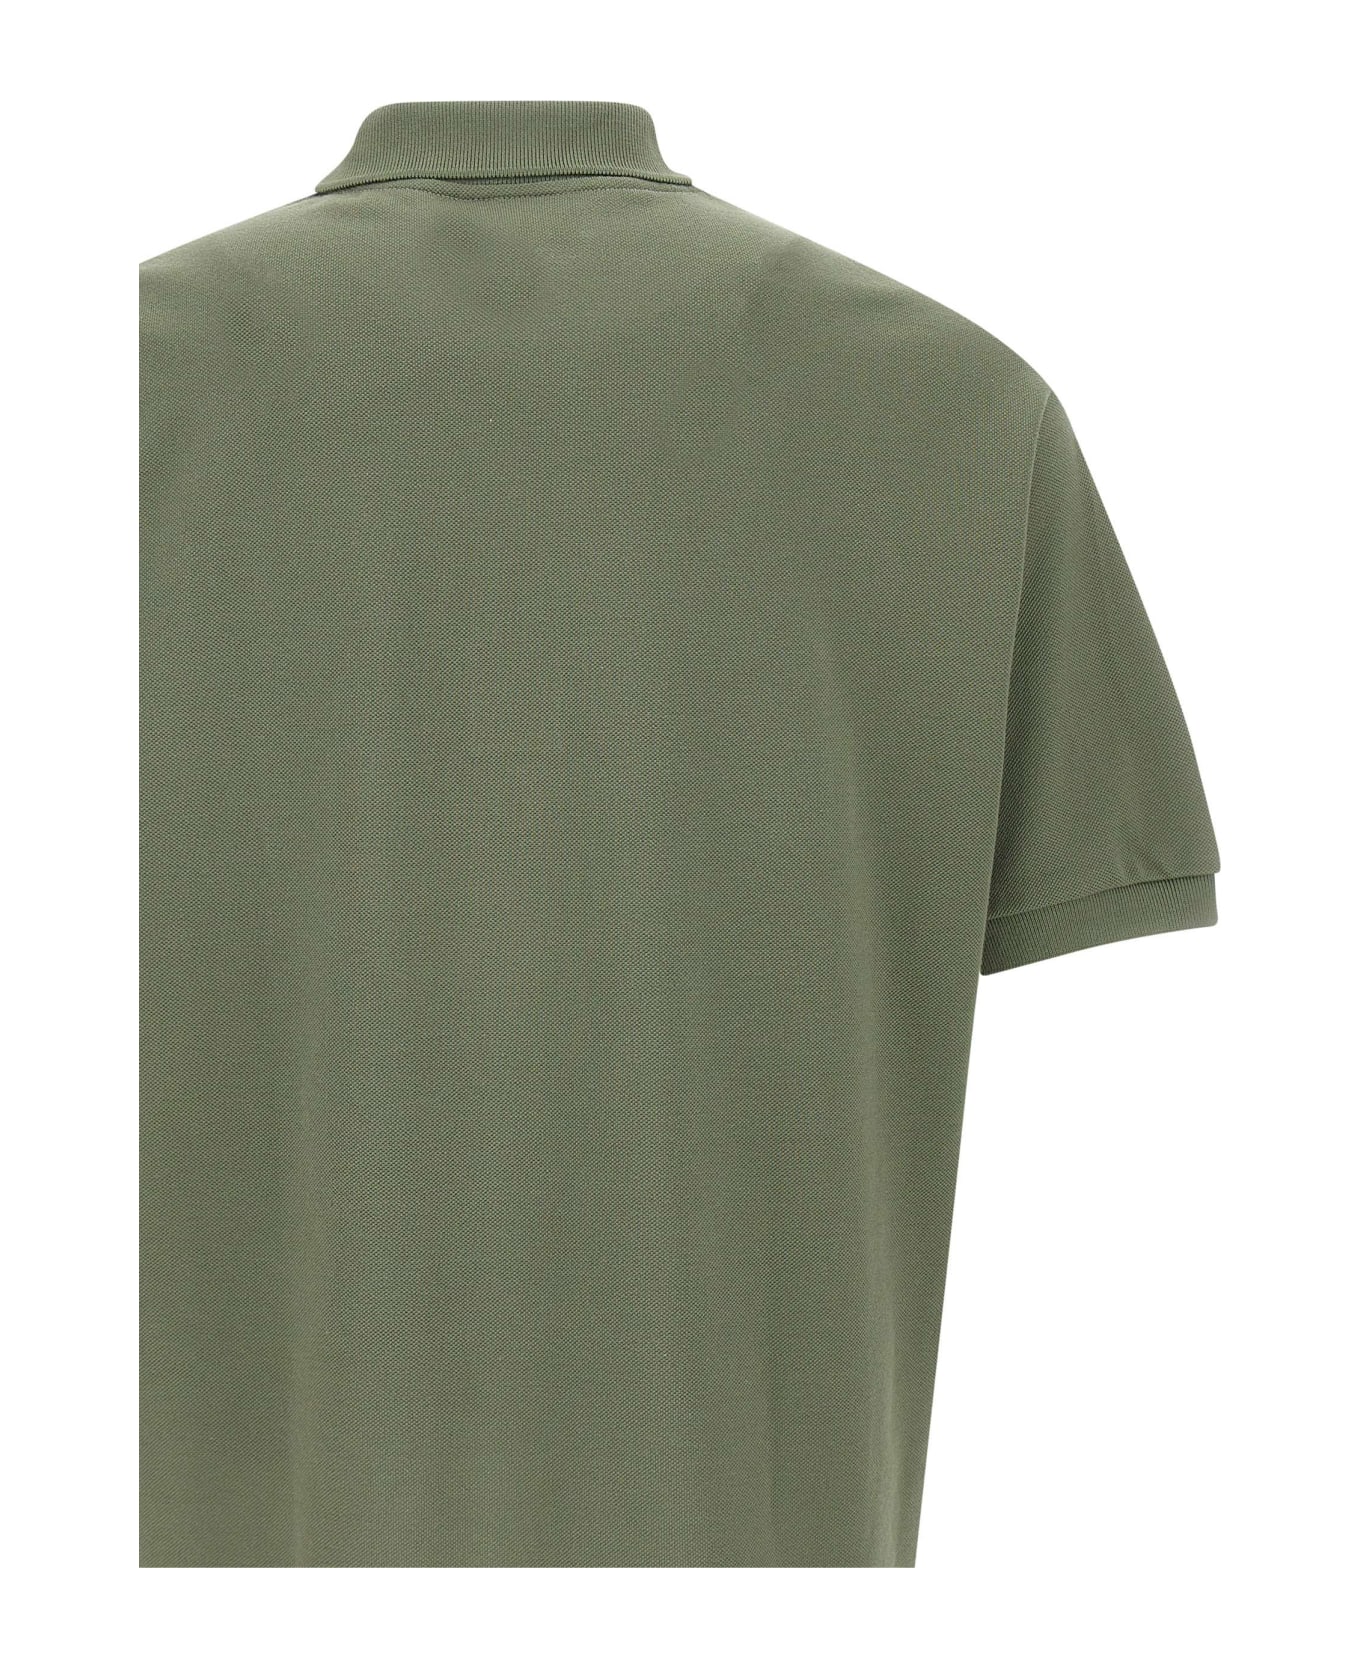 Lacoste Piquet Cotton Polo Shirt - GREEN ポロシャツ